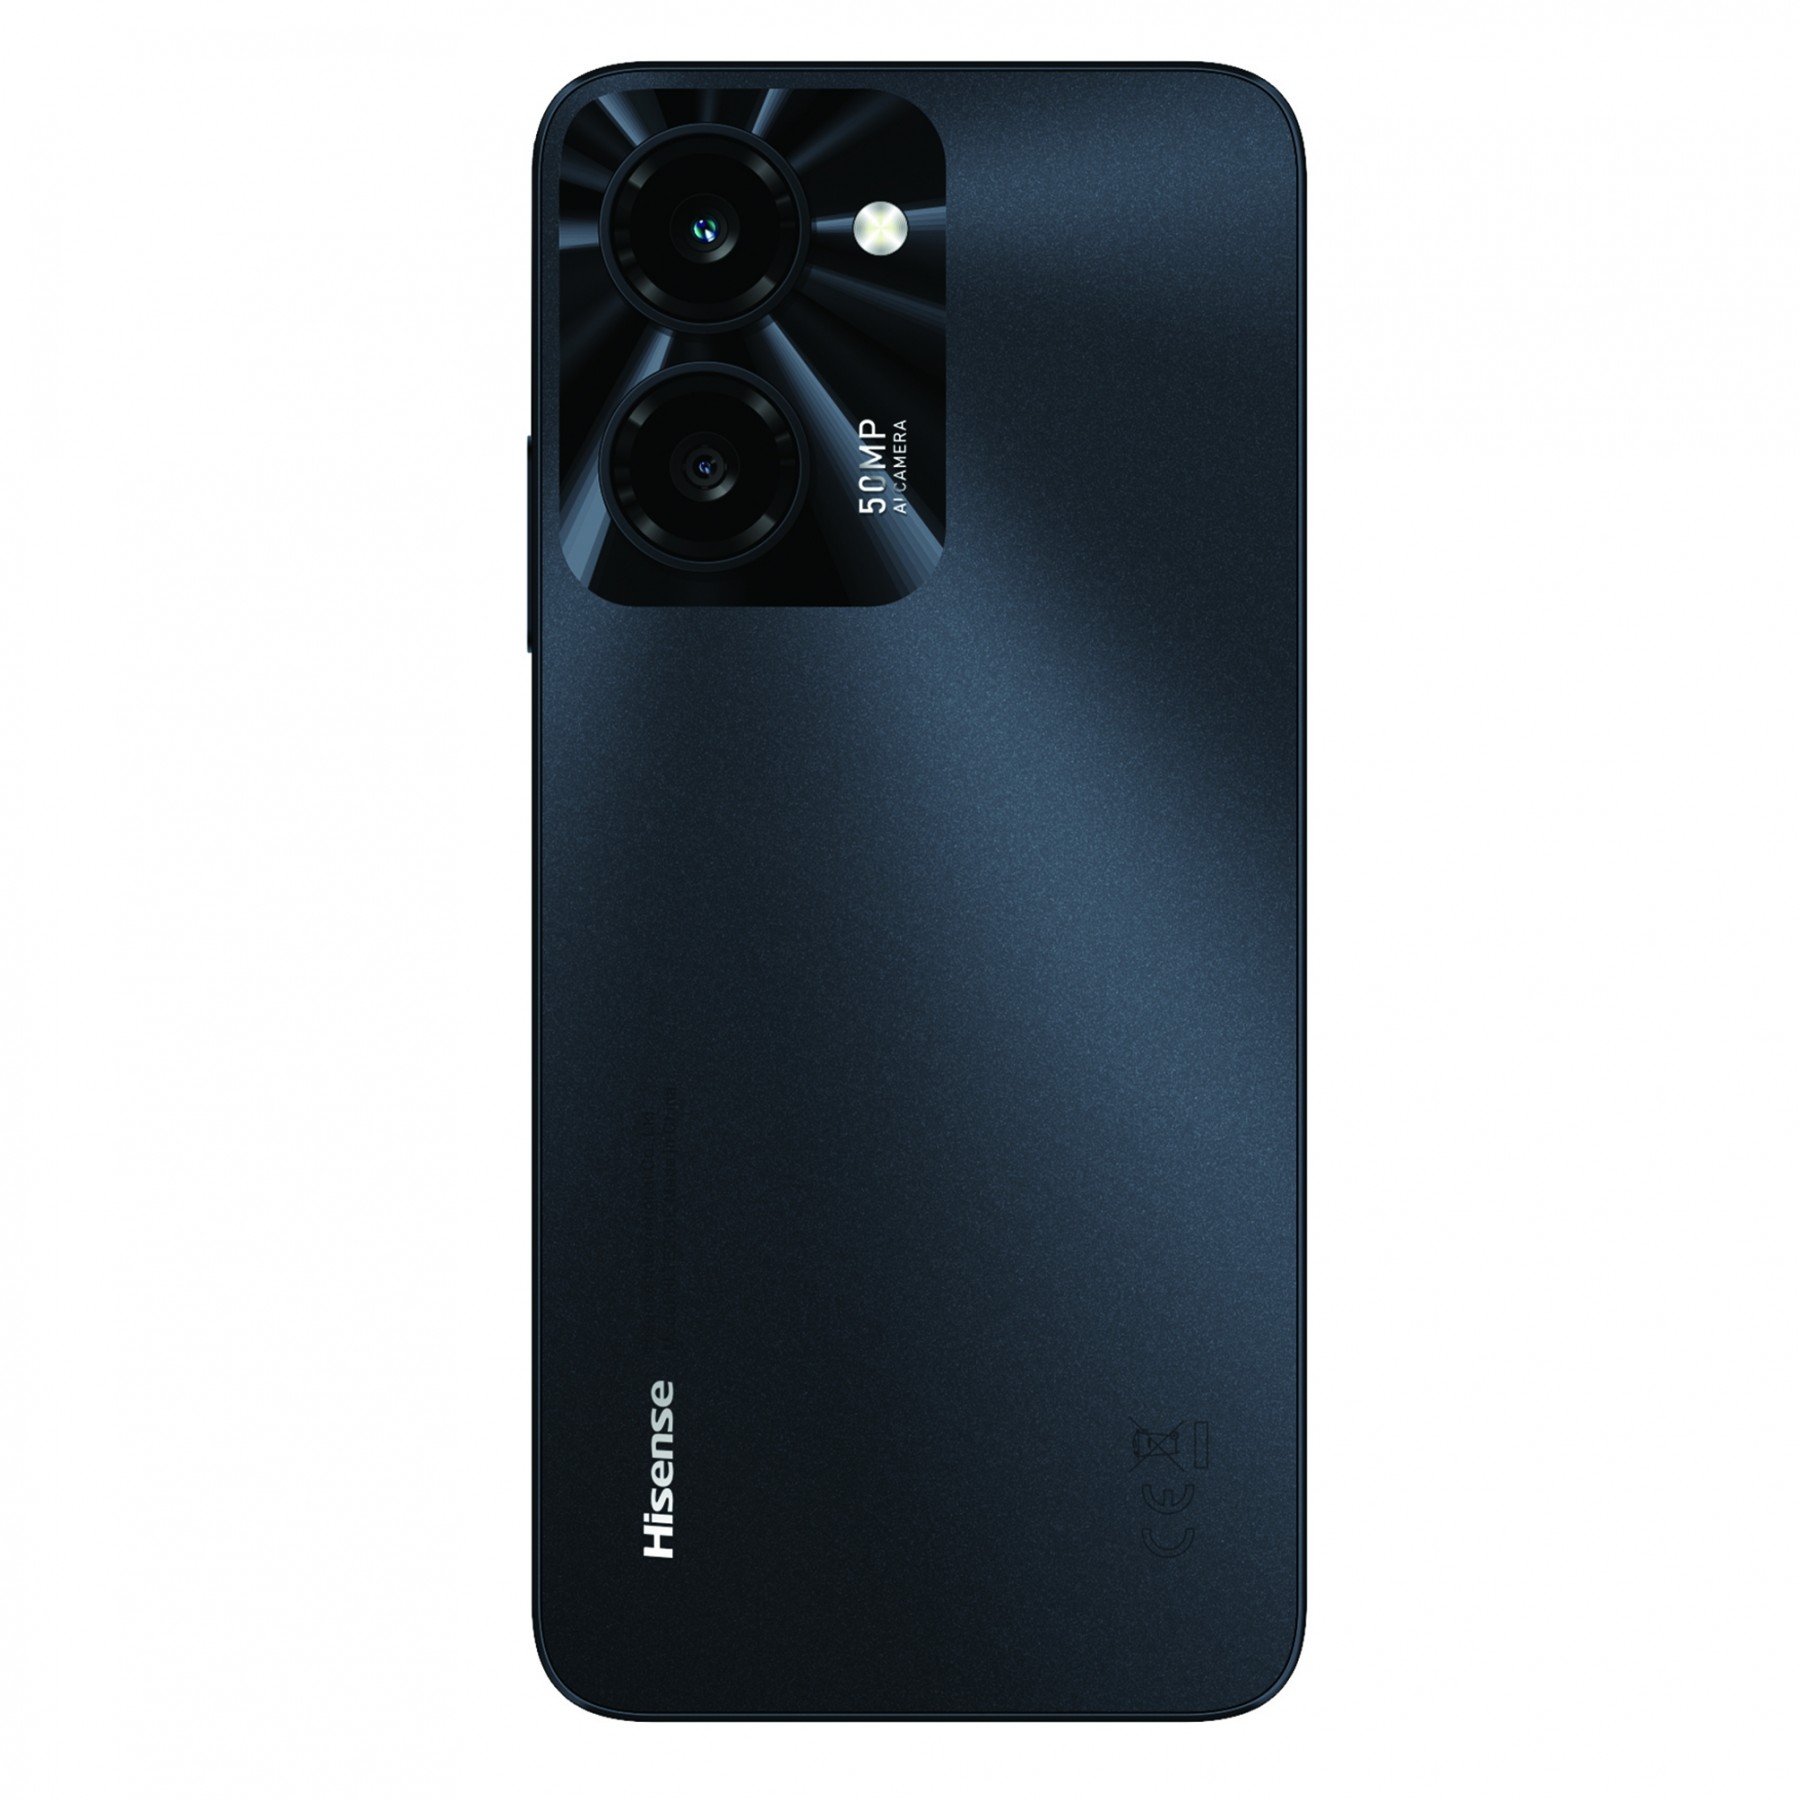 Hisense E70 Pro (Vodacom) 